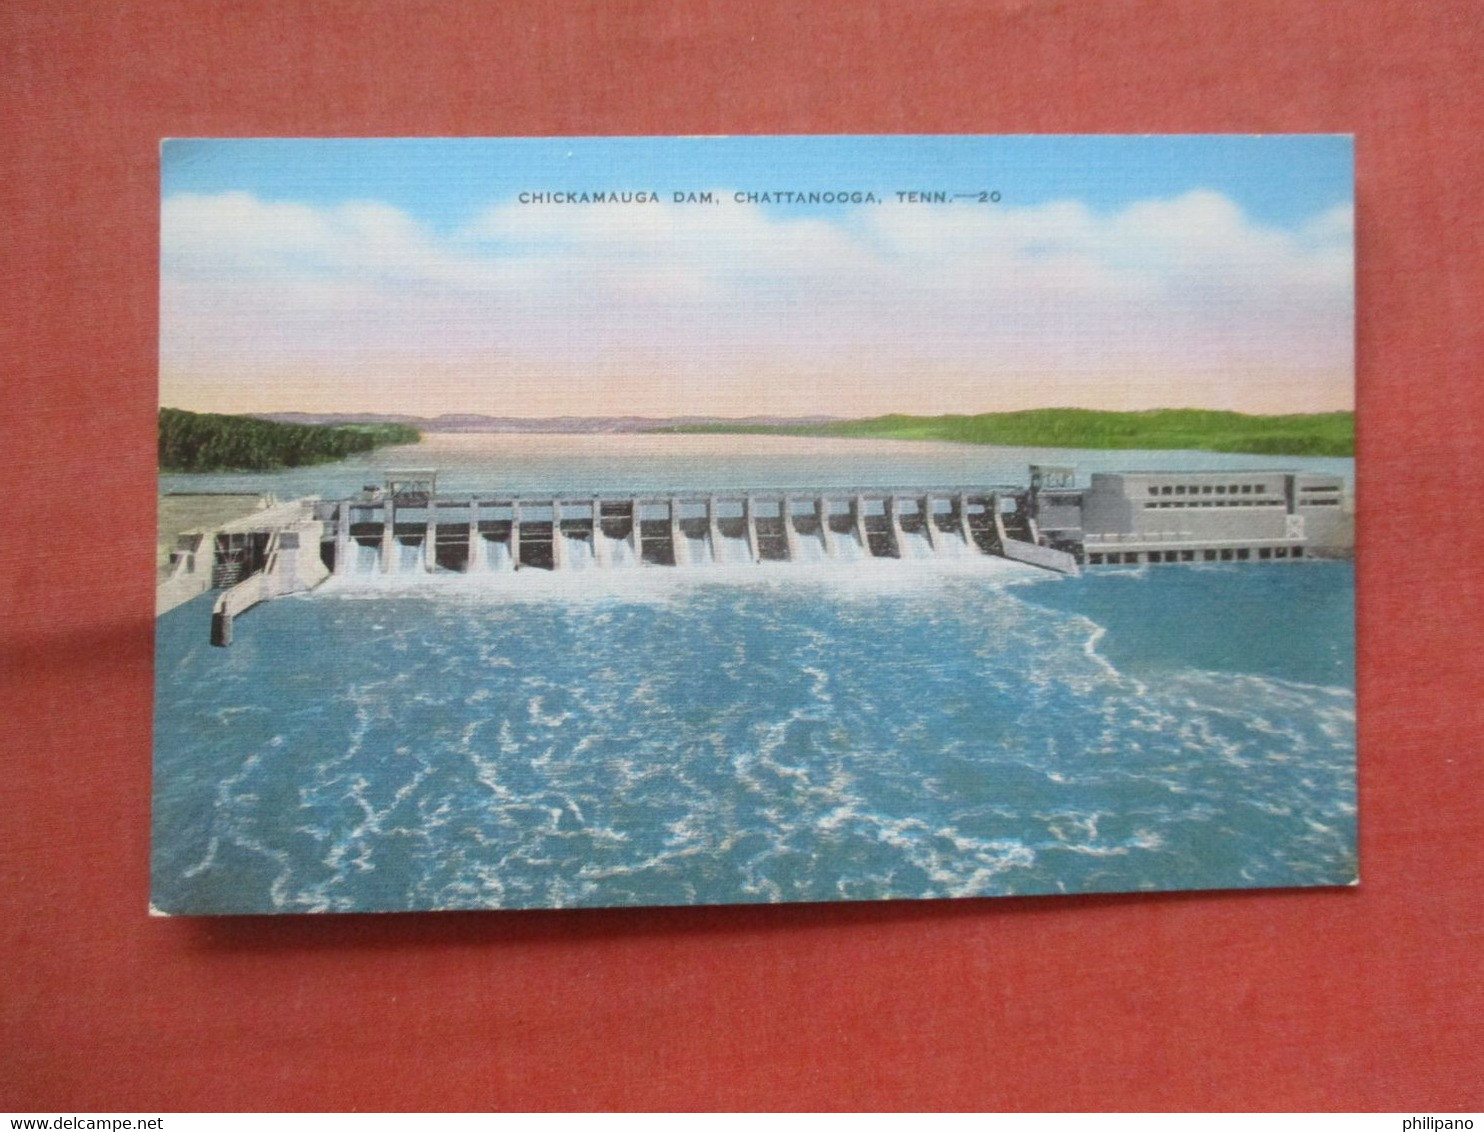 Chickamauga Dam  Chattanooga Tennessee > Chattanooga      ref 5546 - Chattanooga